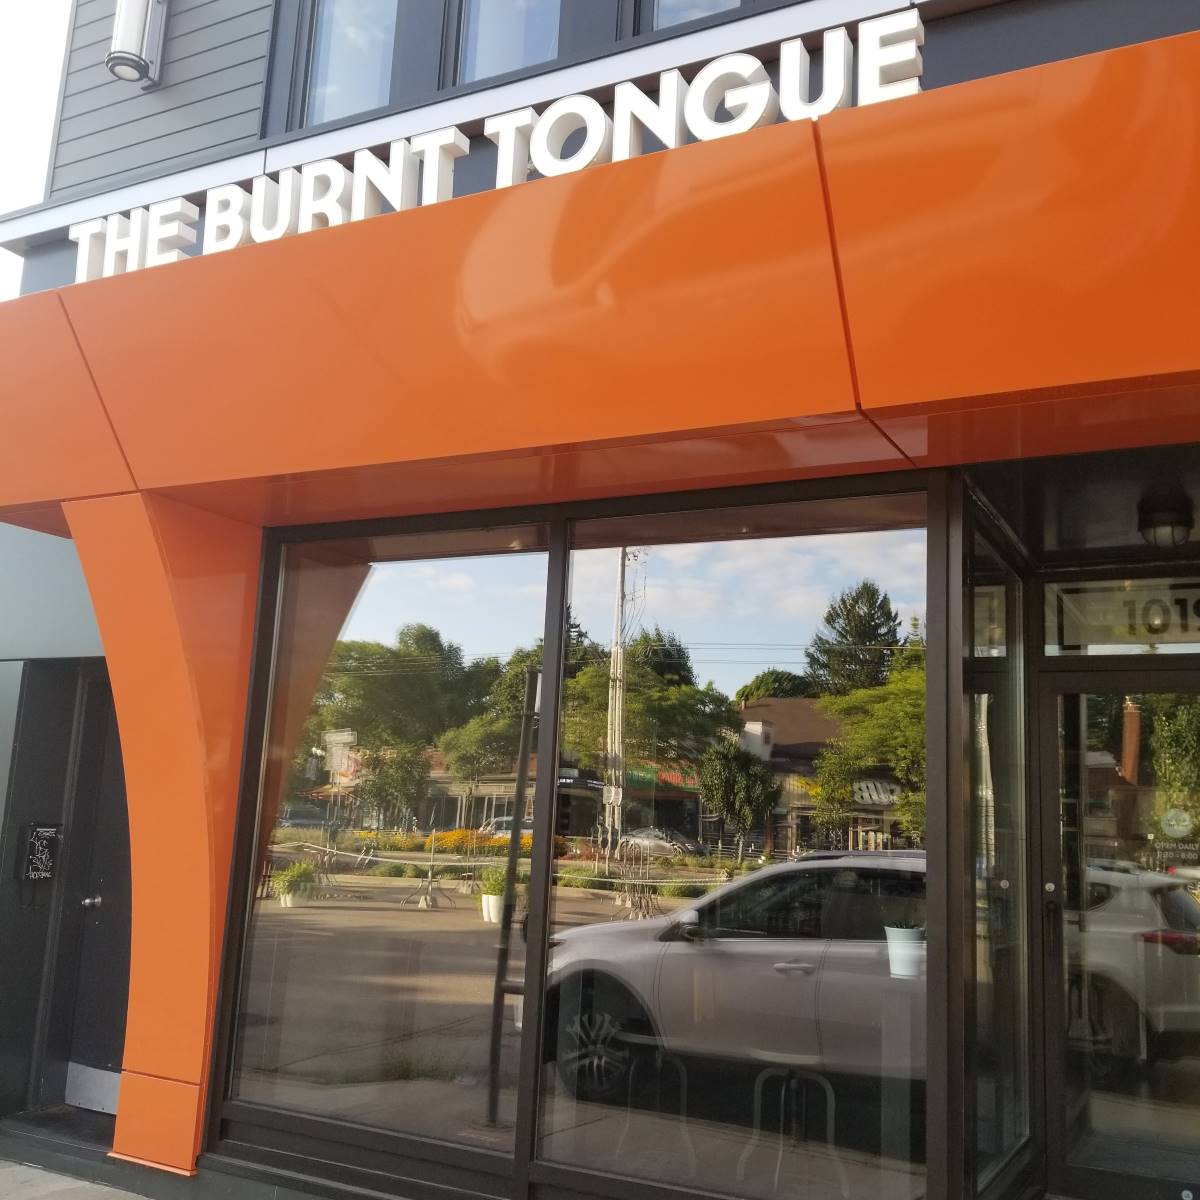 The Burnt Tongue